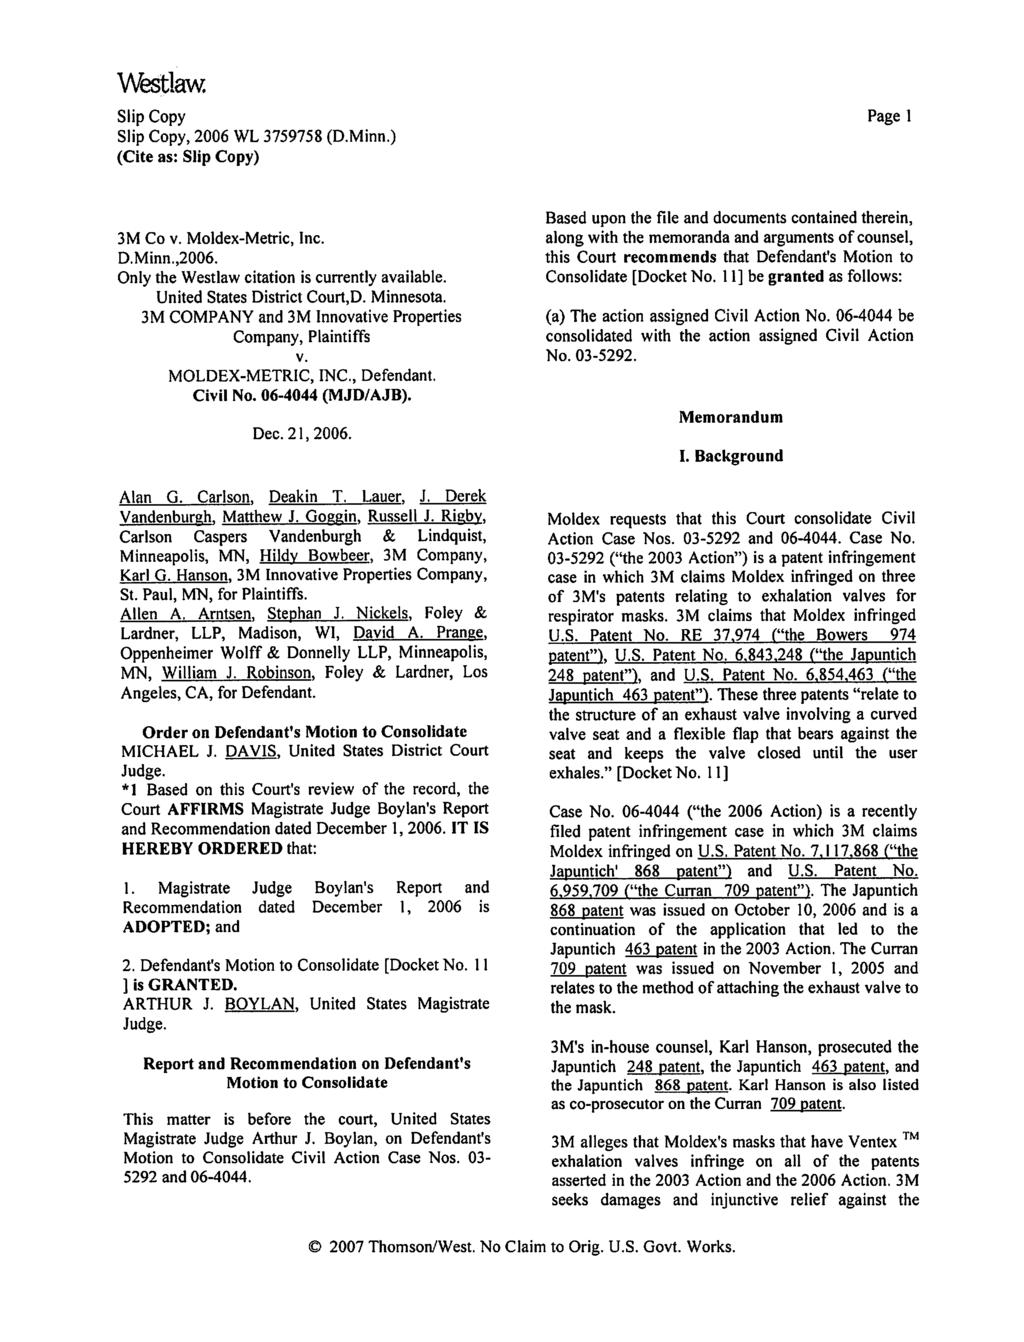 Case 1:07-cv-00054-JJF Document